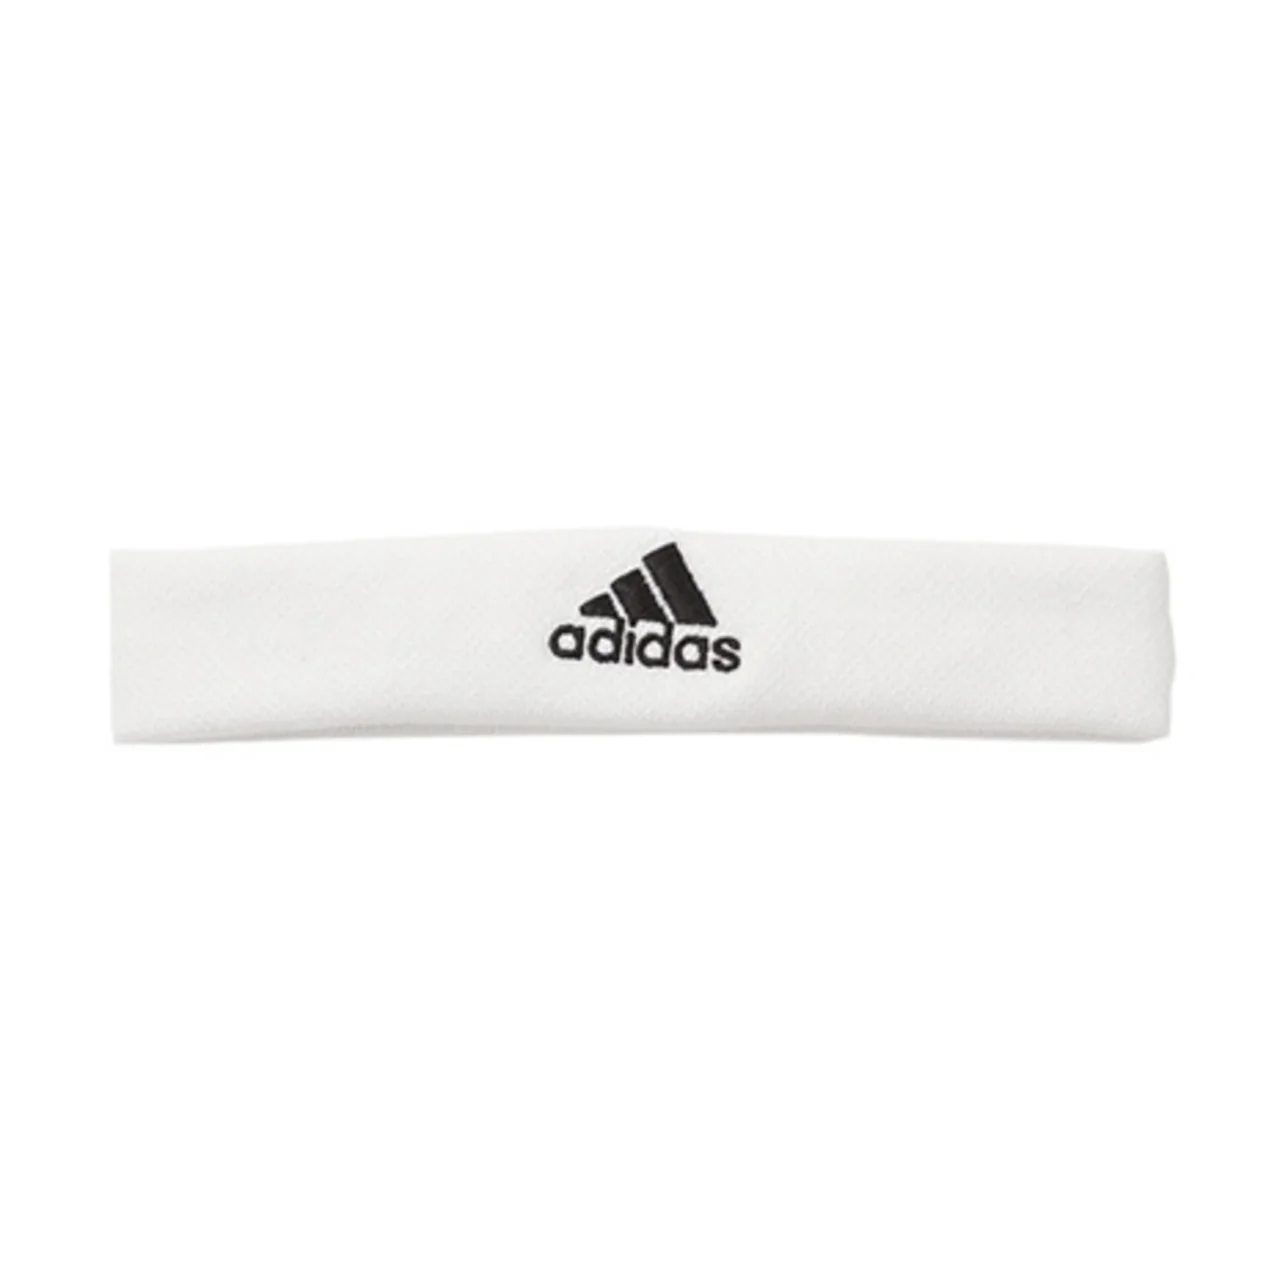 Adidas Headband White/Black